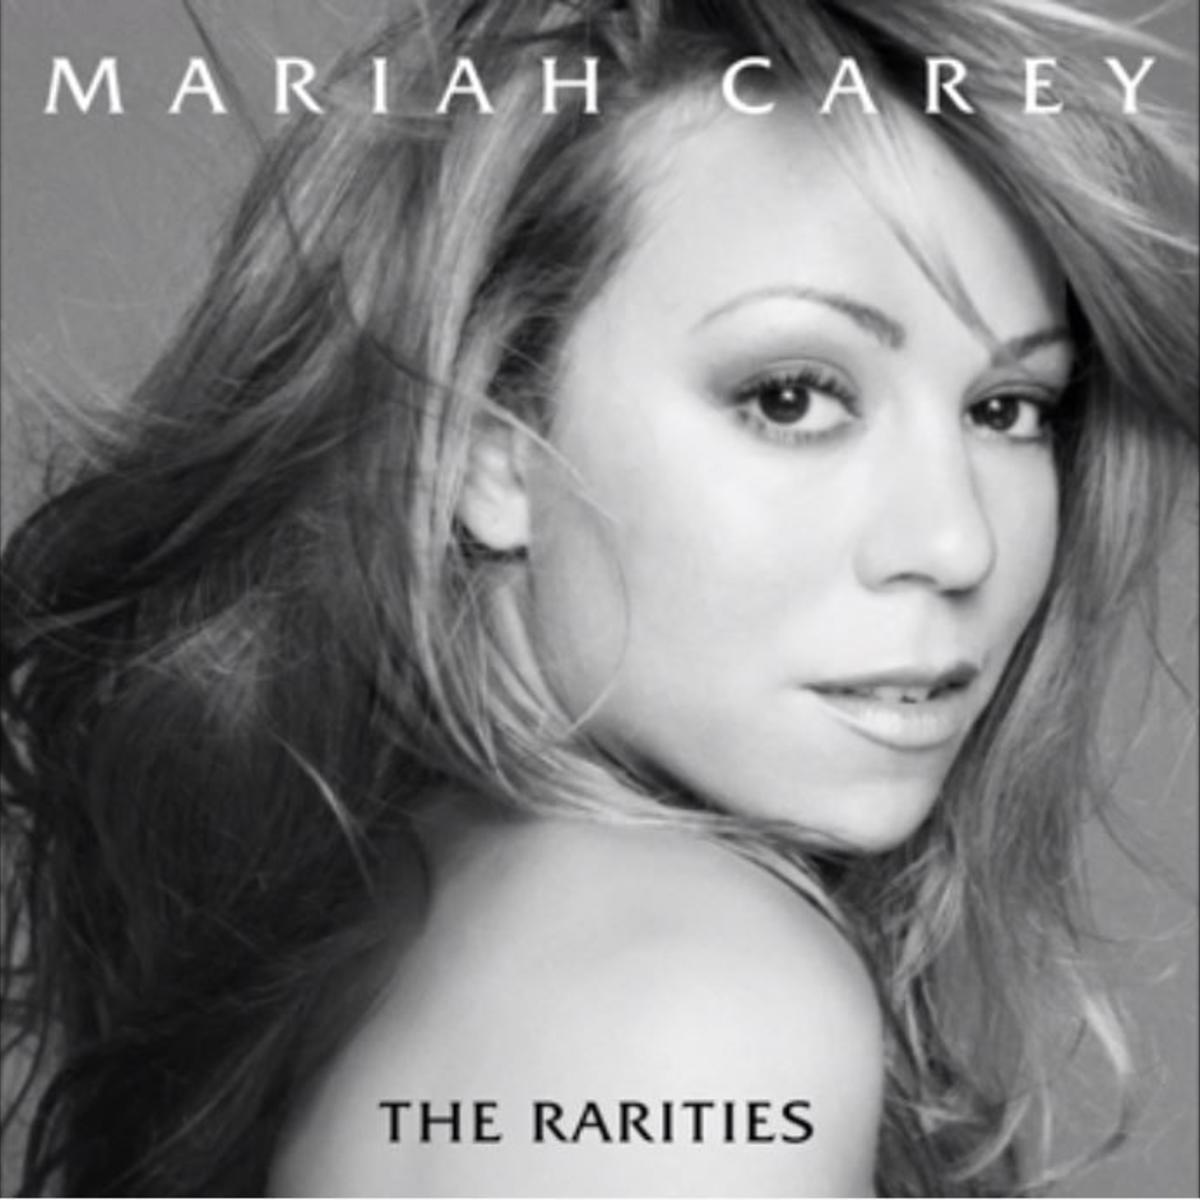 Listen To “The Rarities” By Mariah Carey